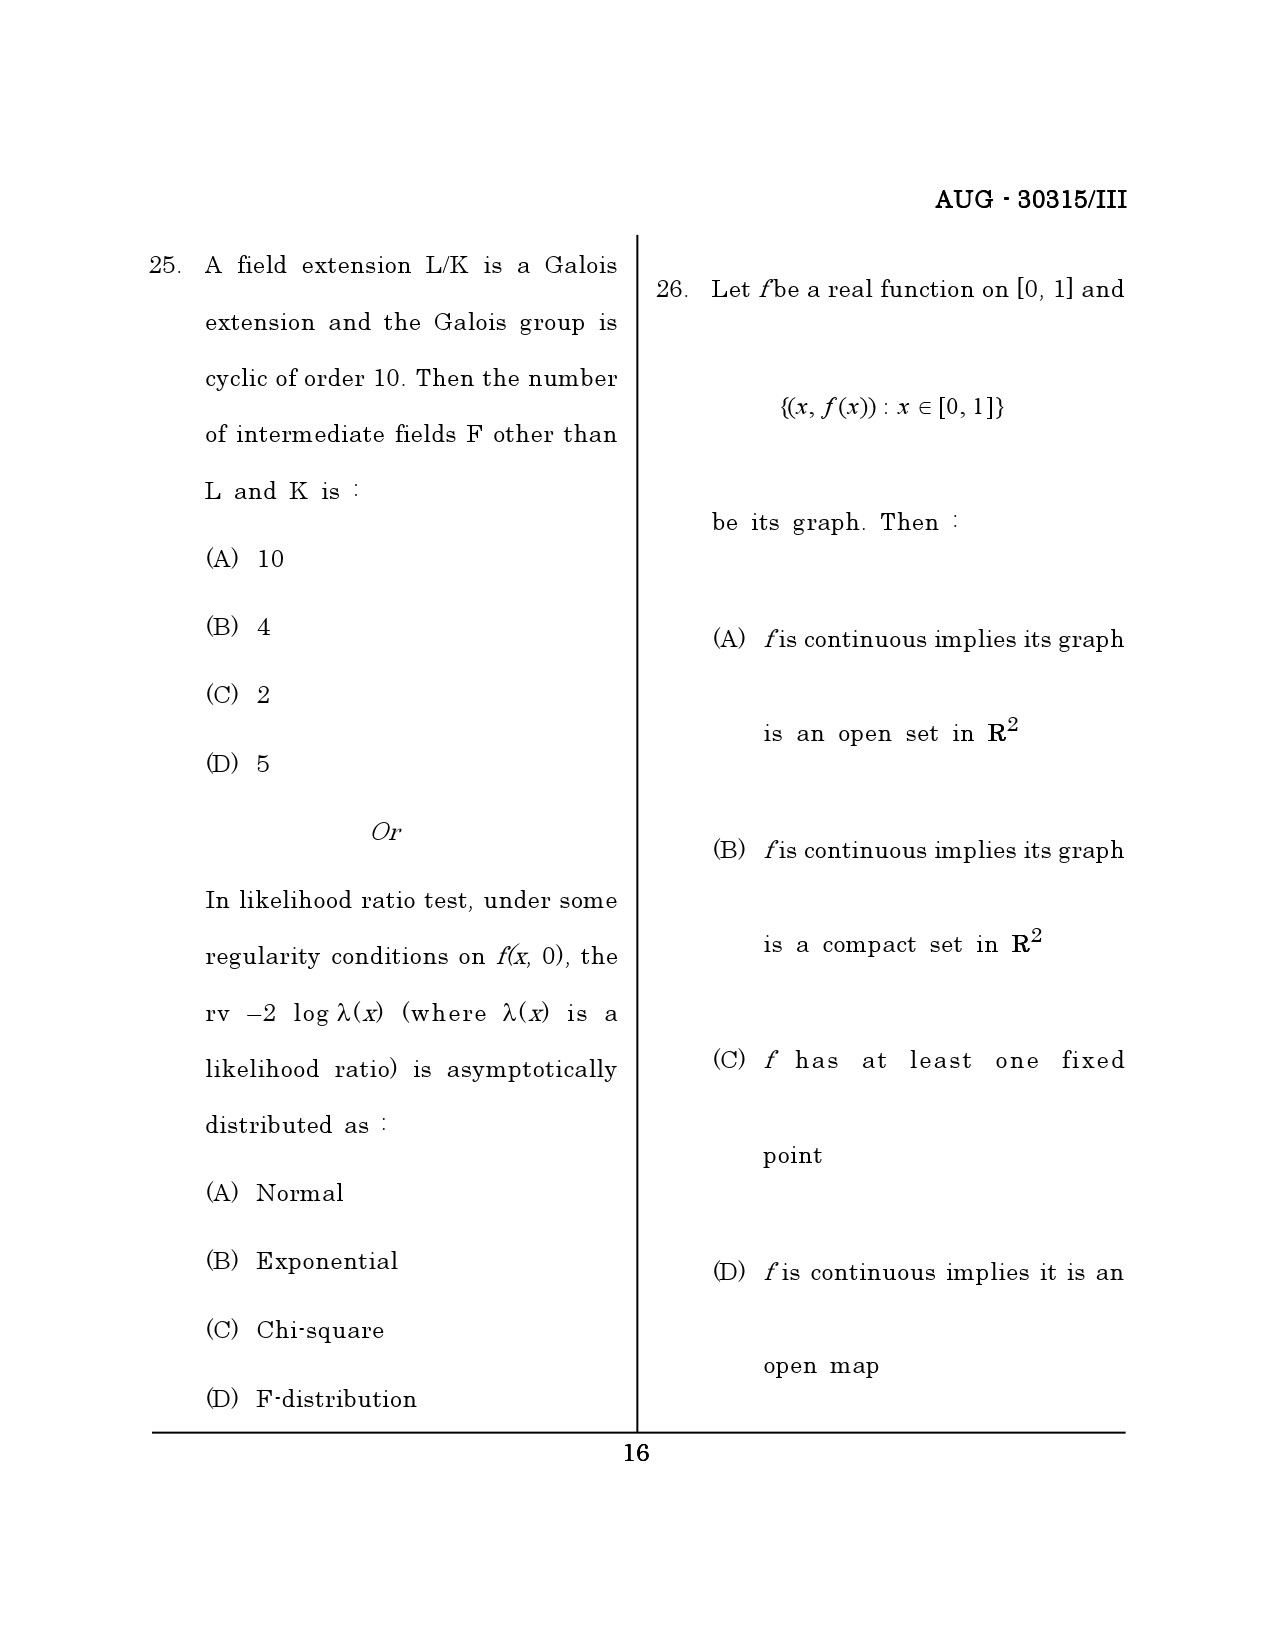 Maharashtra SET Mathematical Sciences Question Paper III August 2015 15